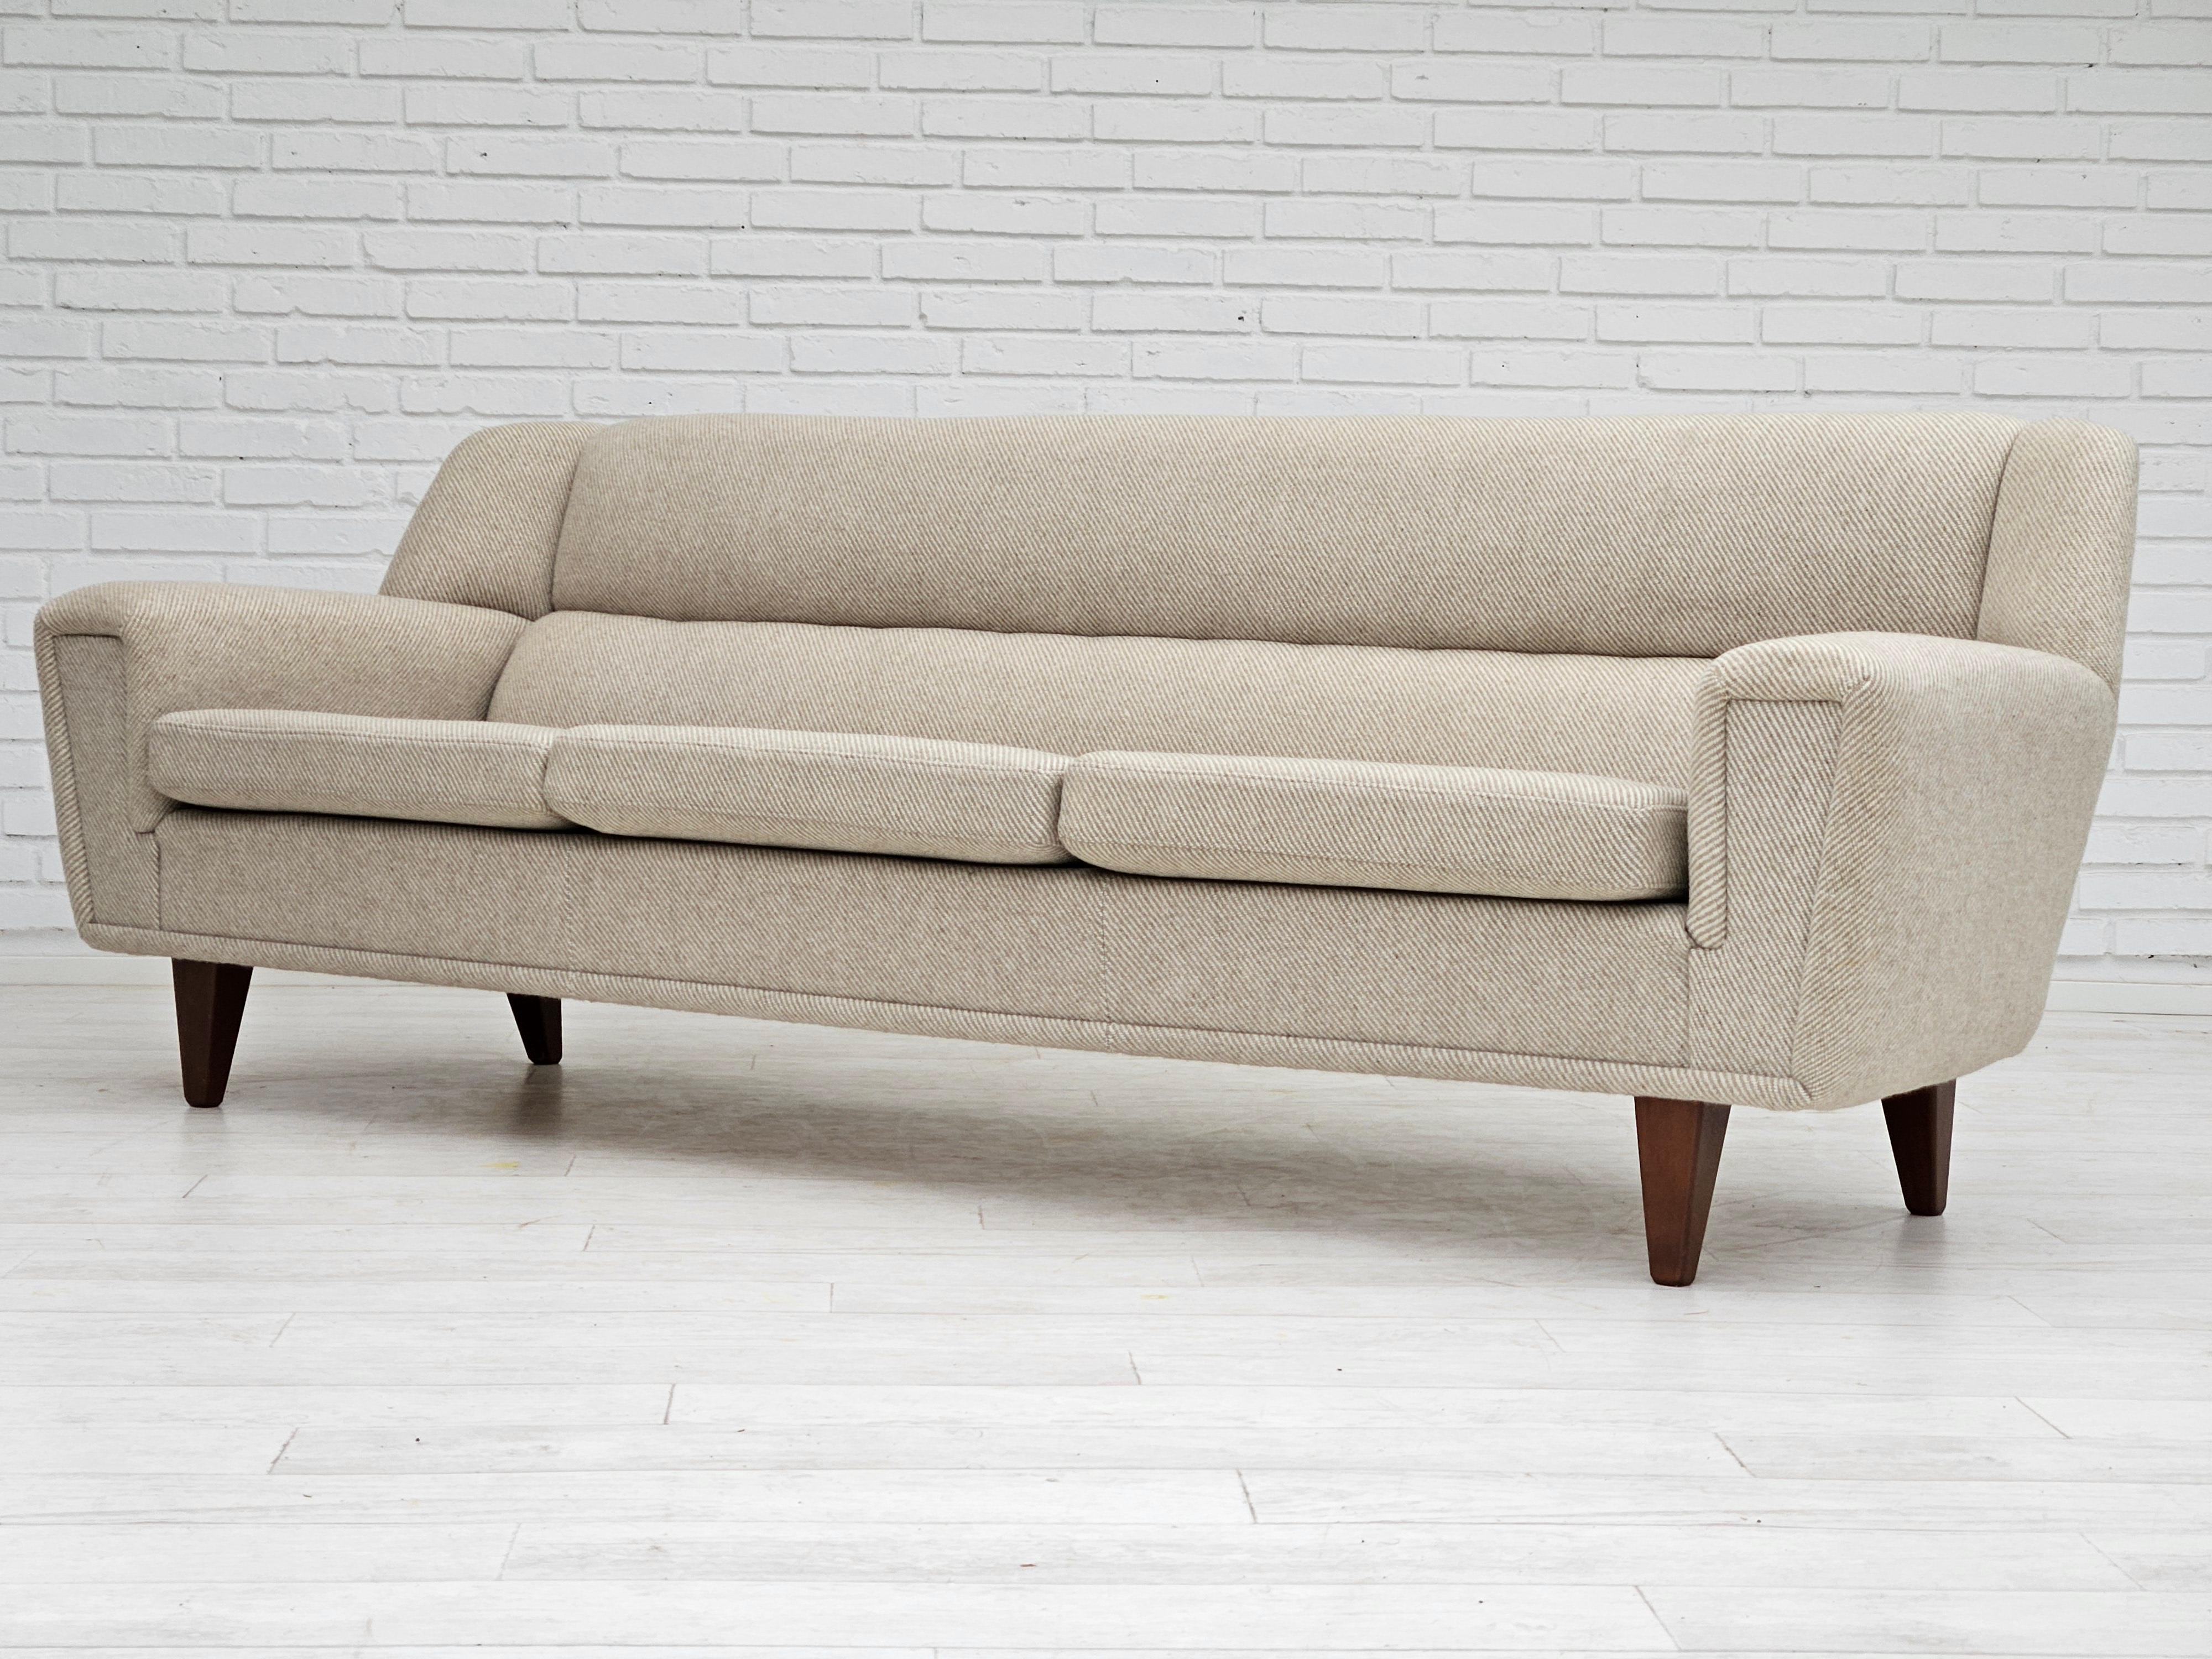 1960s, Danish design sofa by Kurt Østervig model 61, original good condition. 5